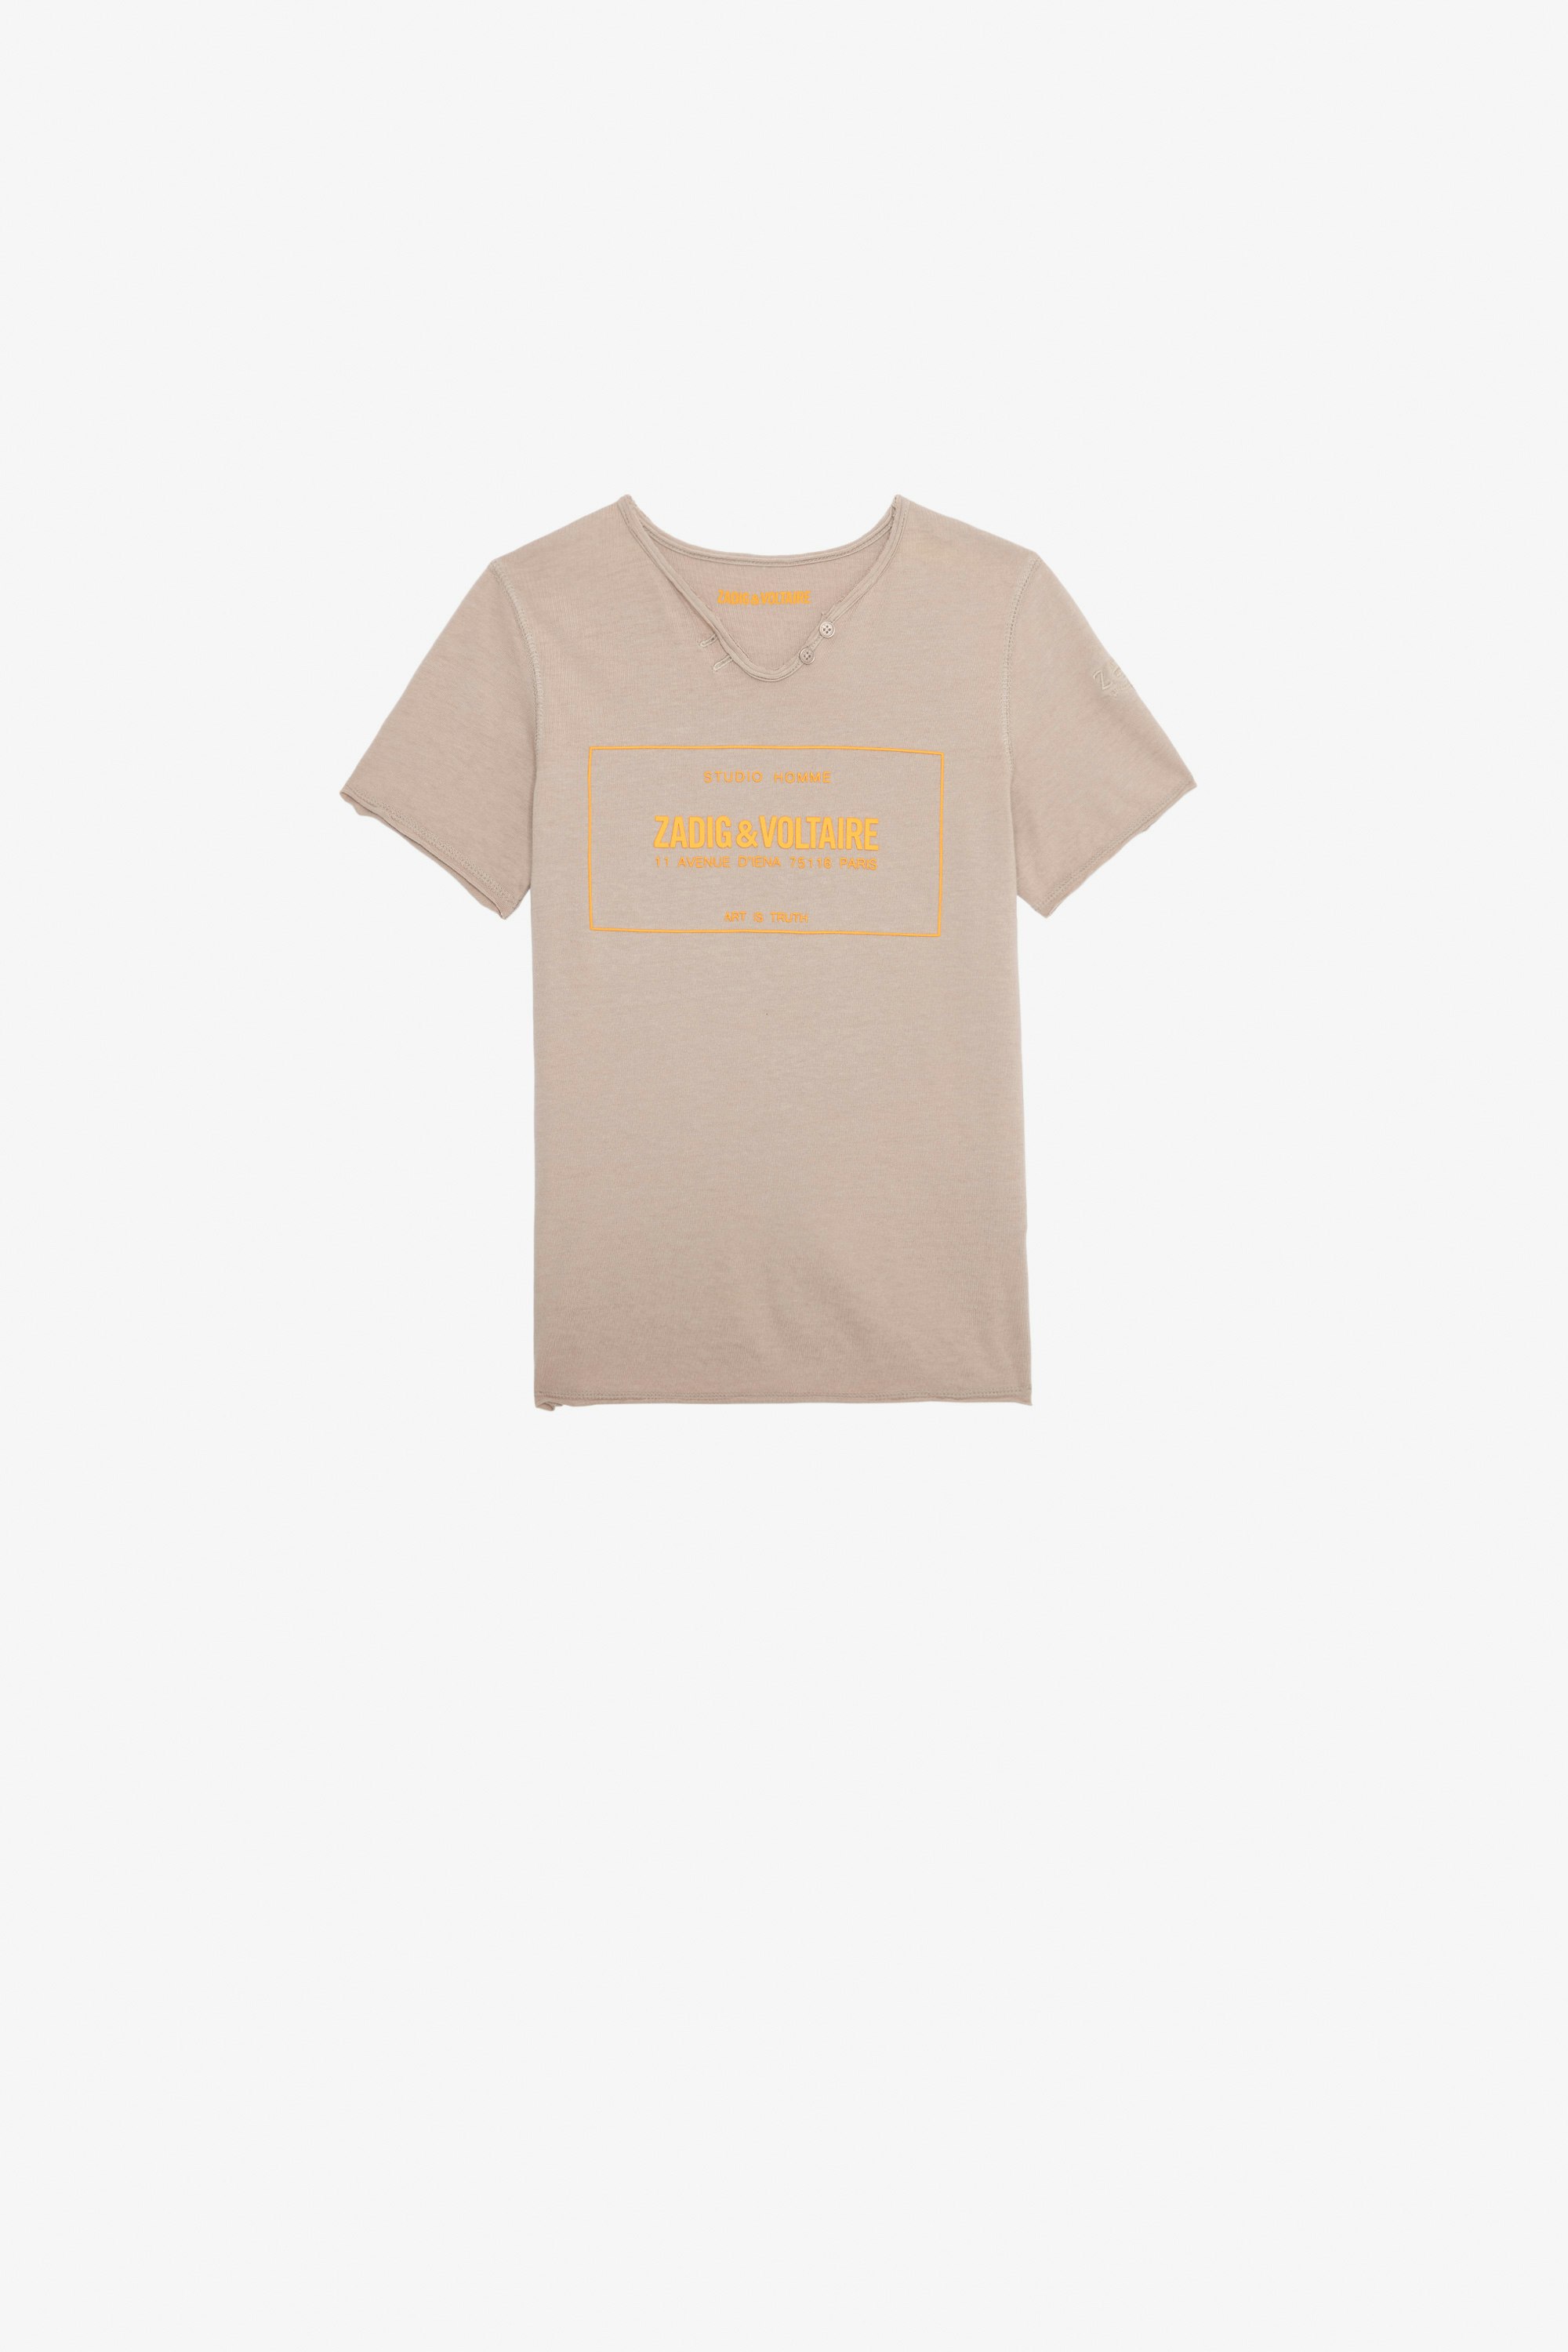 Camiseta Boxer Niño Camiseta beige de punto de algodón de manga corta con escudo estudio para niño.